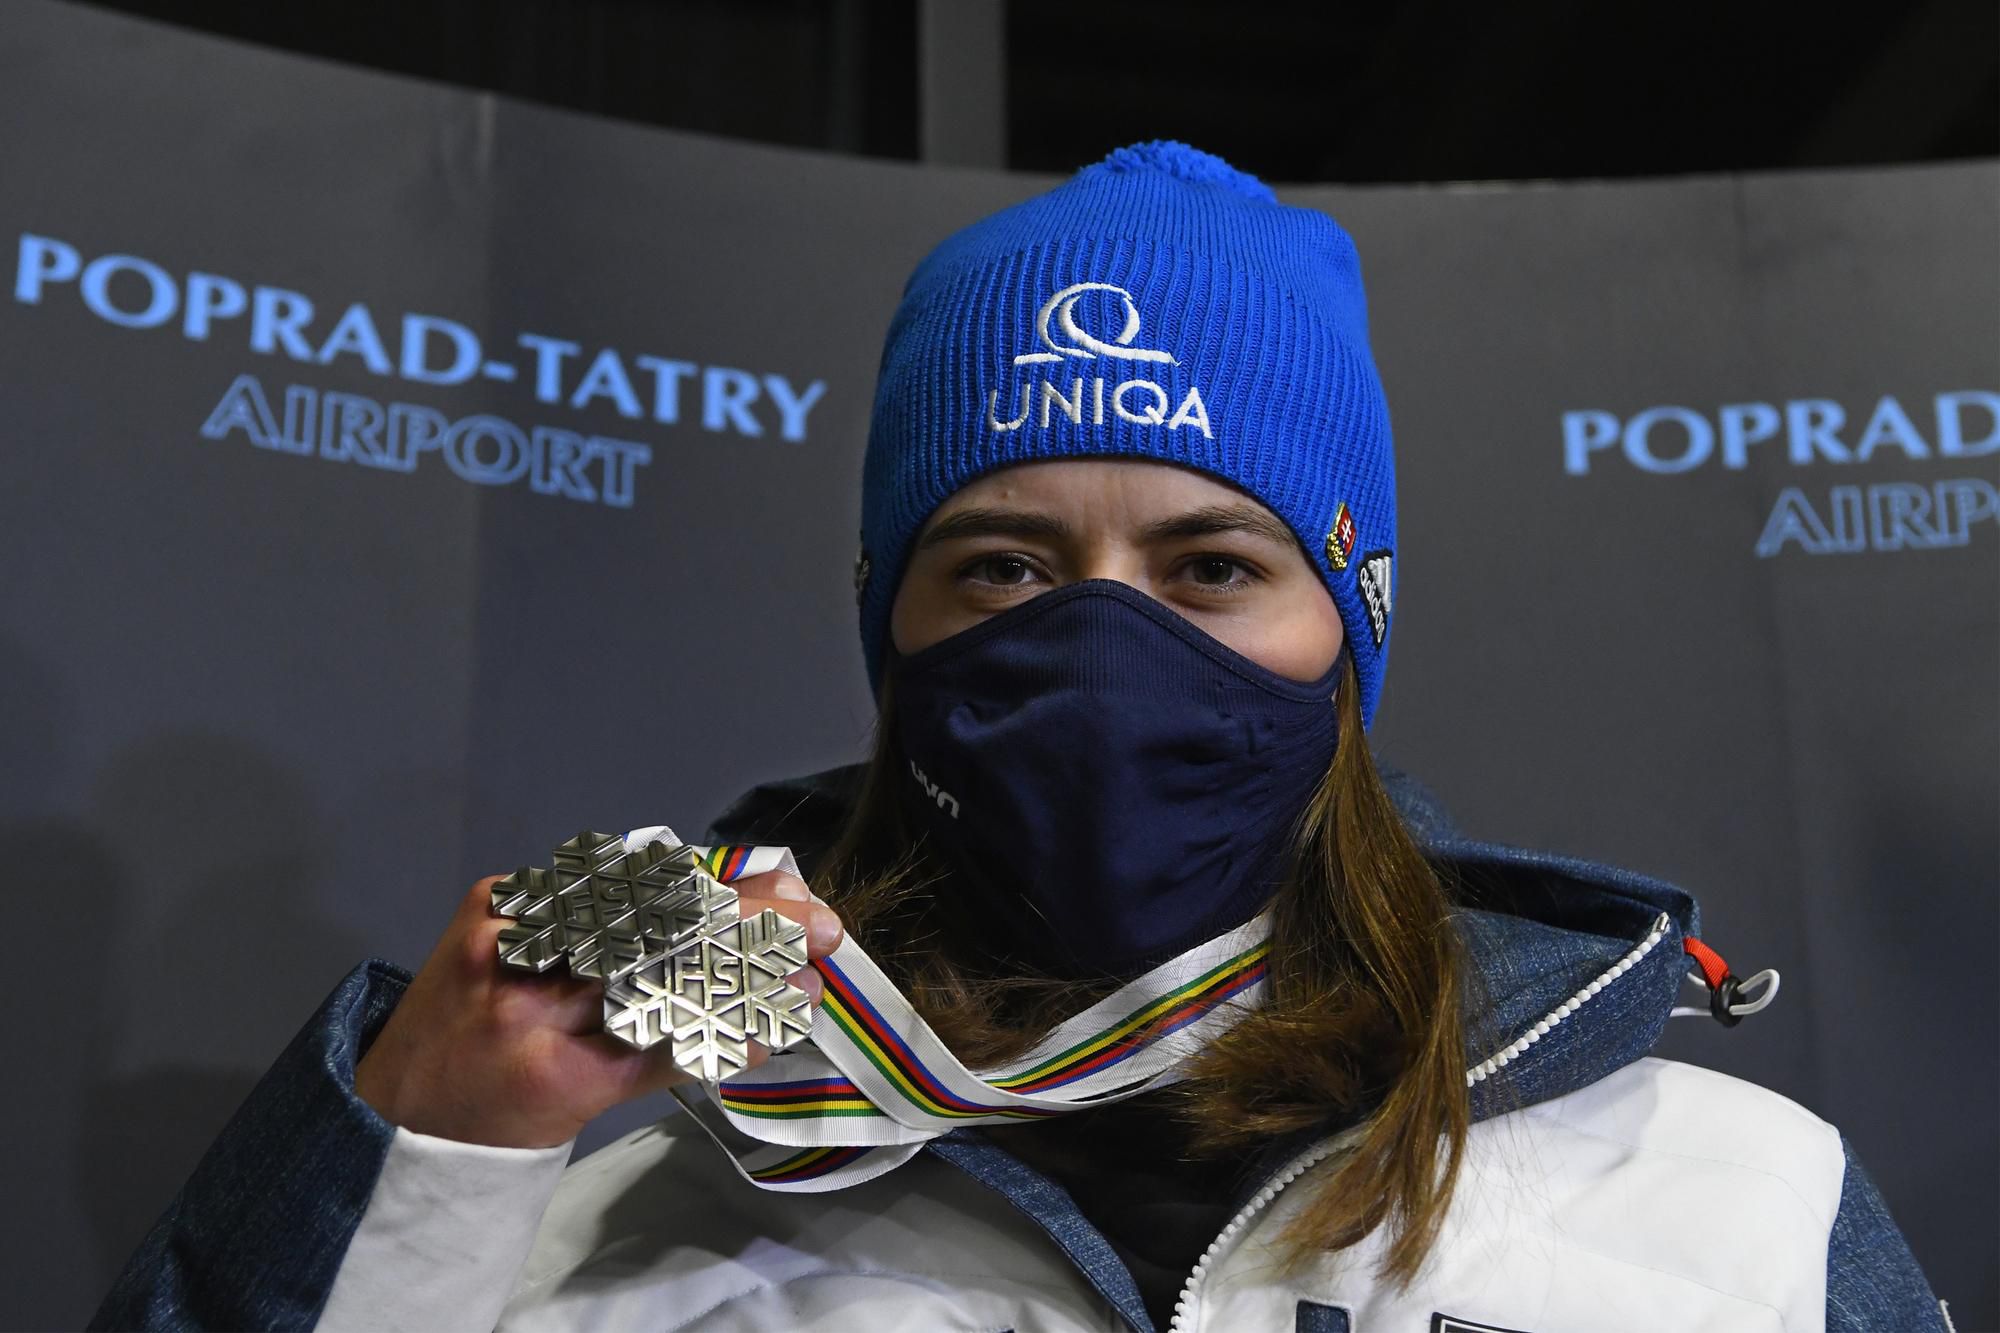 Slovenská lyžiarka Petra Vlhová pózuje s medailami po návrate z MS v alpskom lyžovaní.